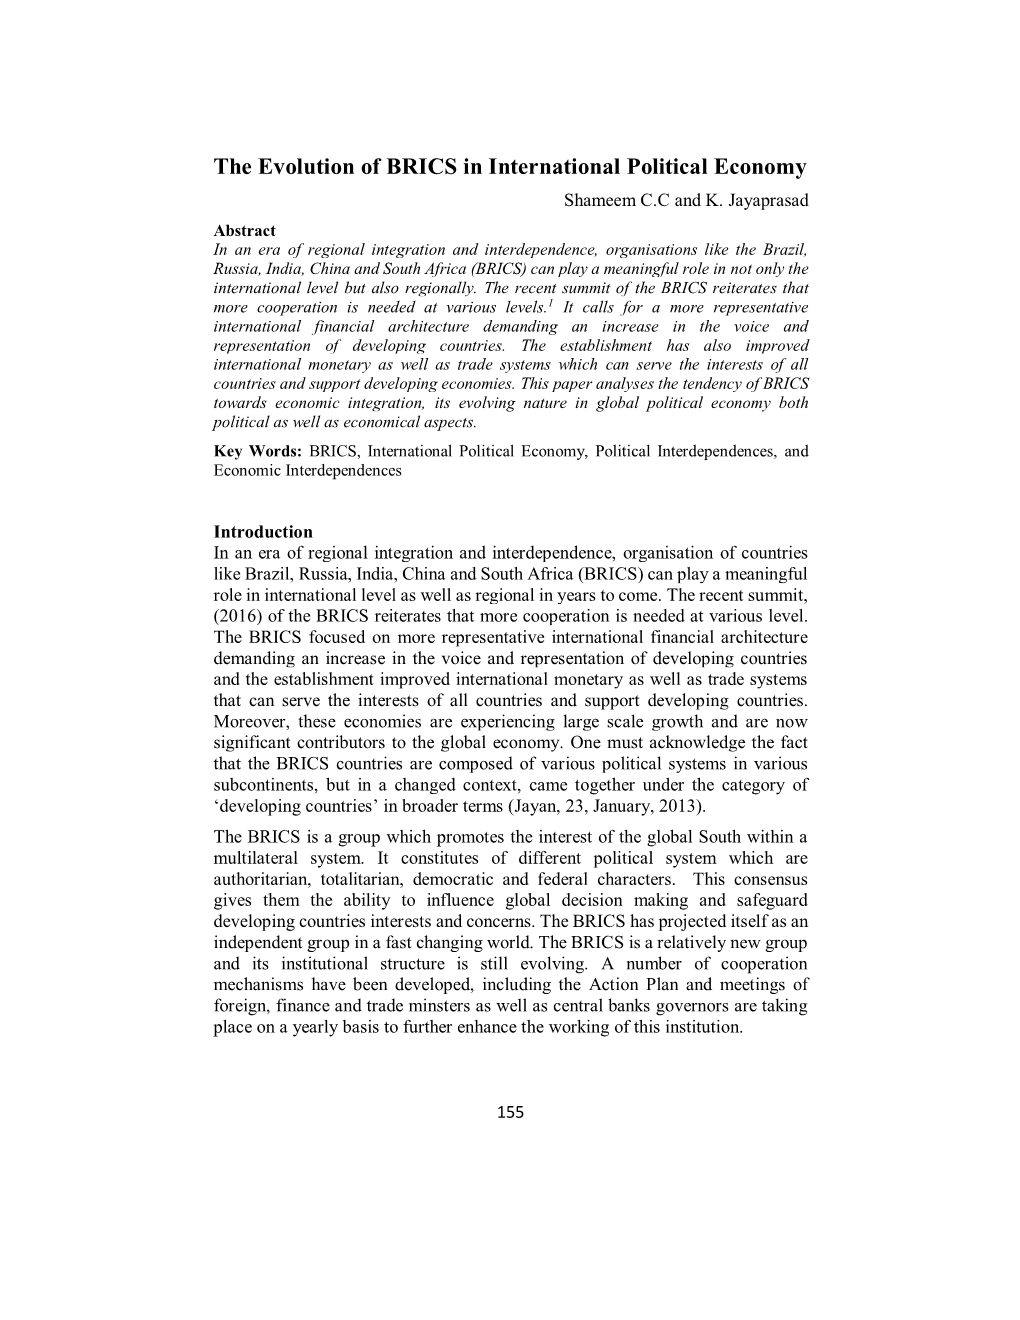 The Evolution of BRICS in International Political Economy Shameem C.C and K